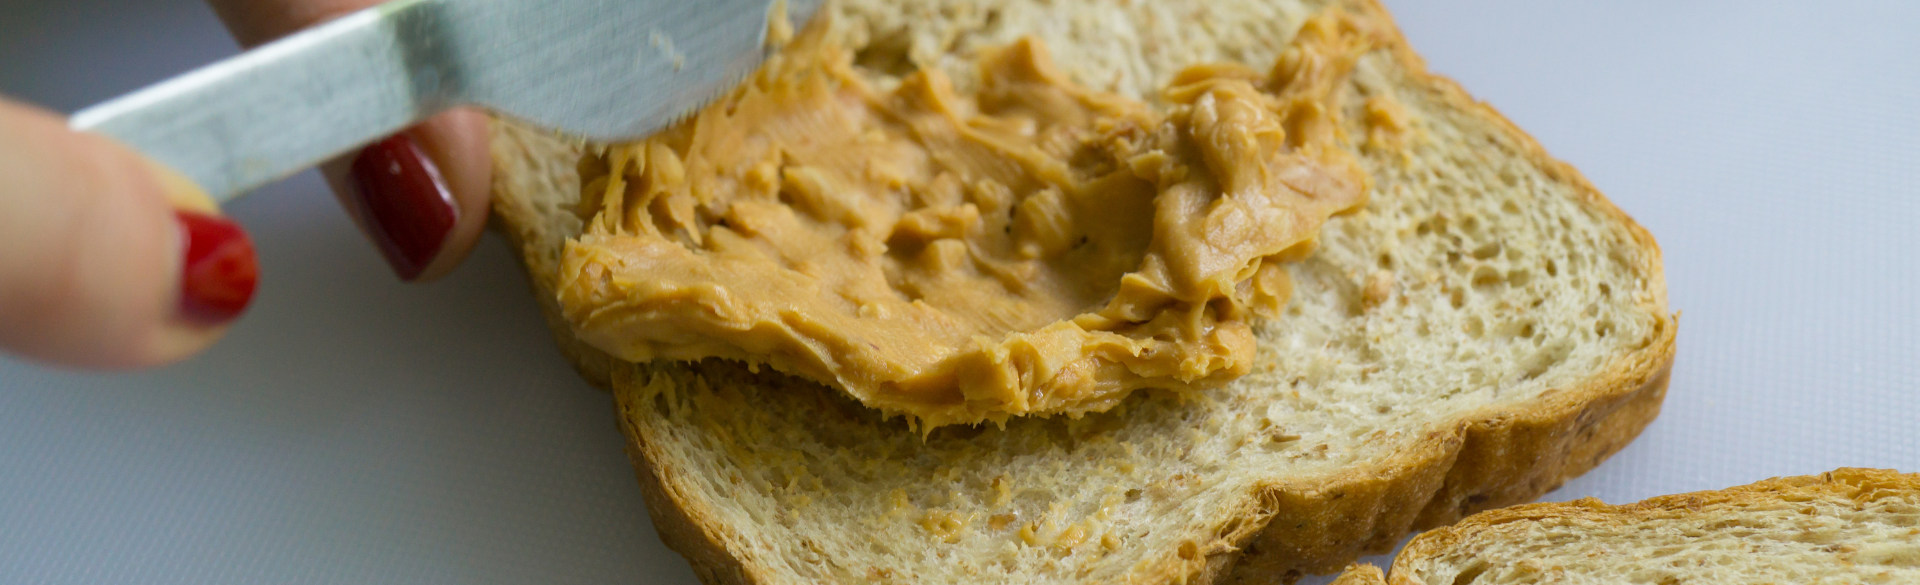 peanut butter is spread on a slice of bread